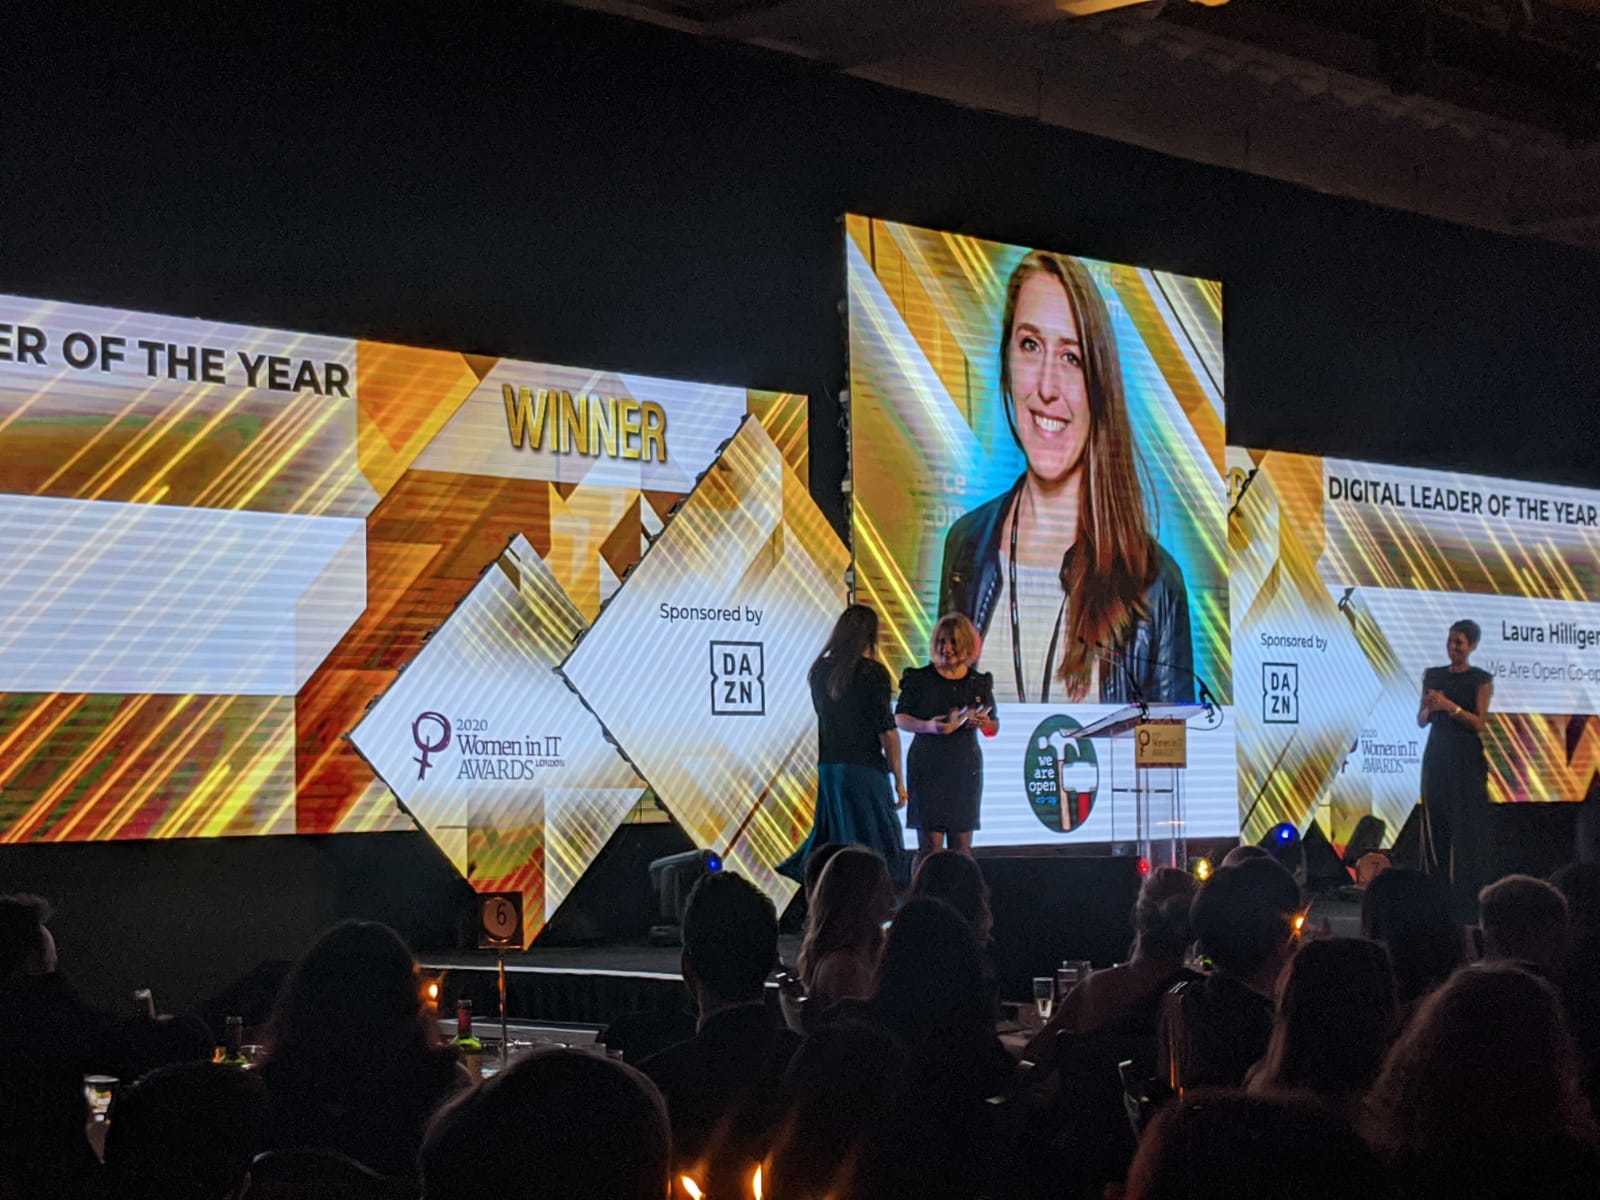 Laura Hilliger winning Digital Leader of the Year award